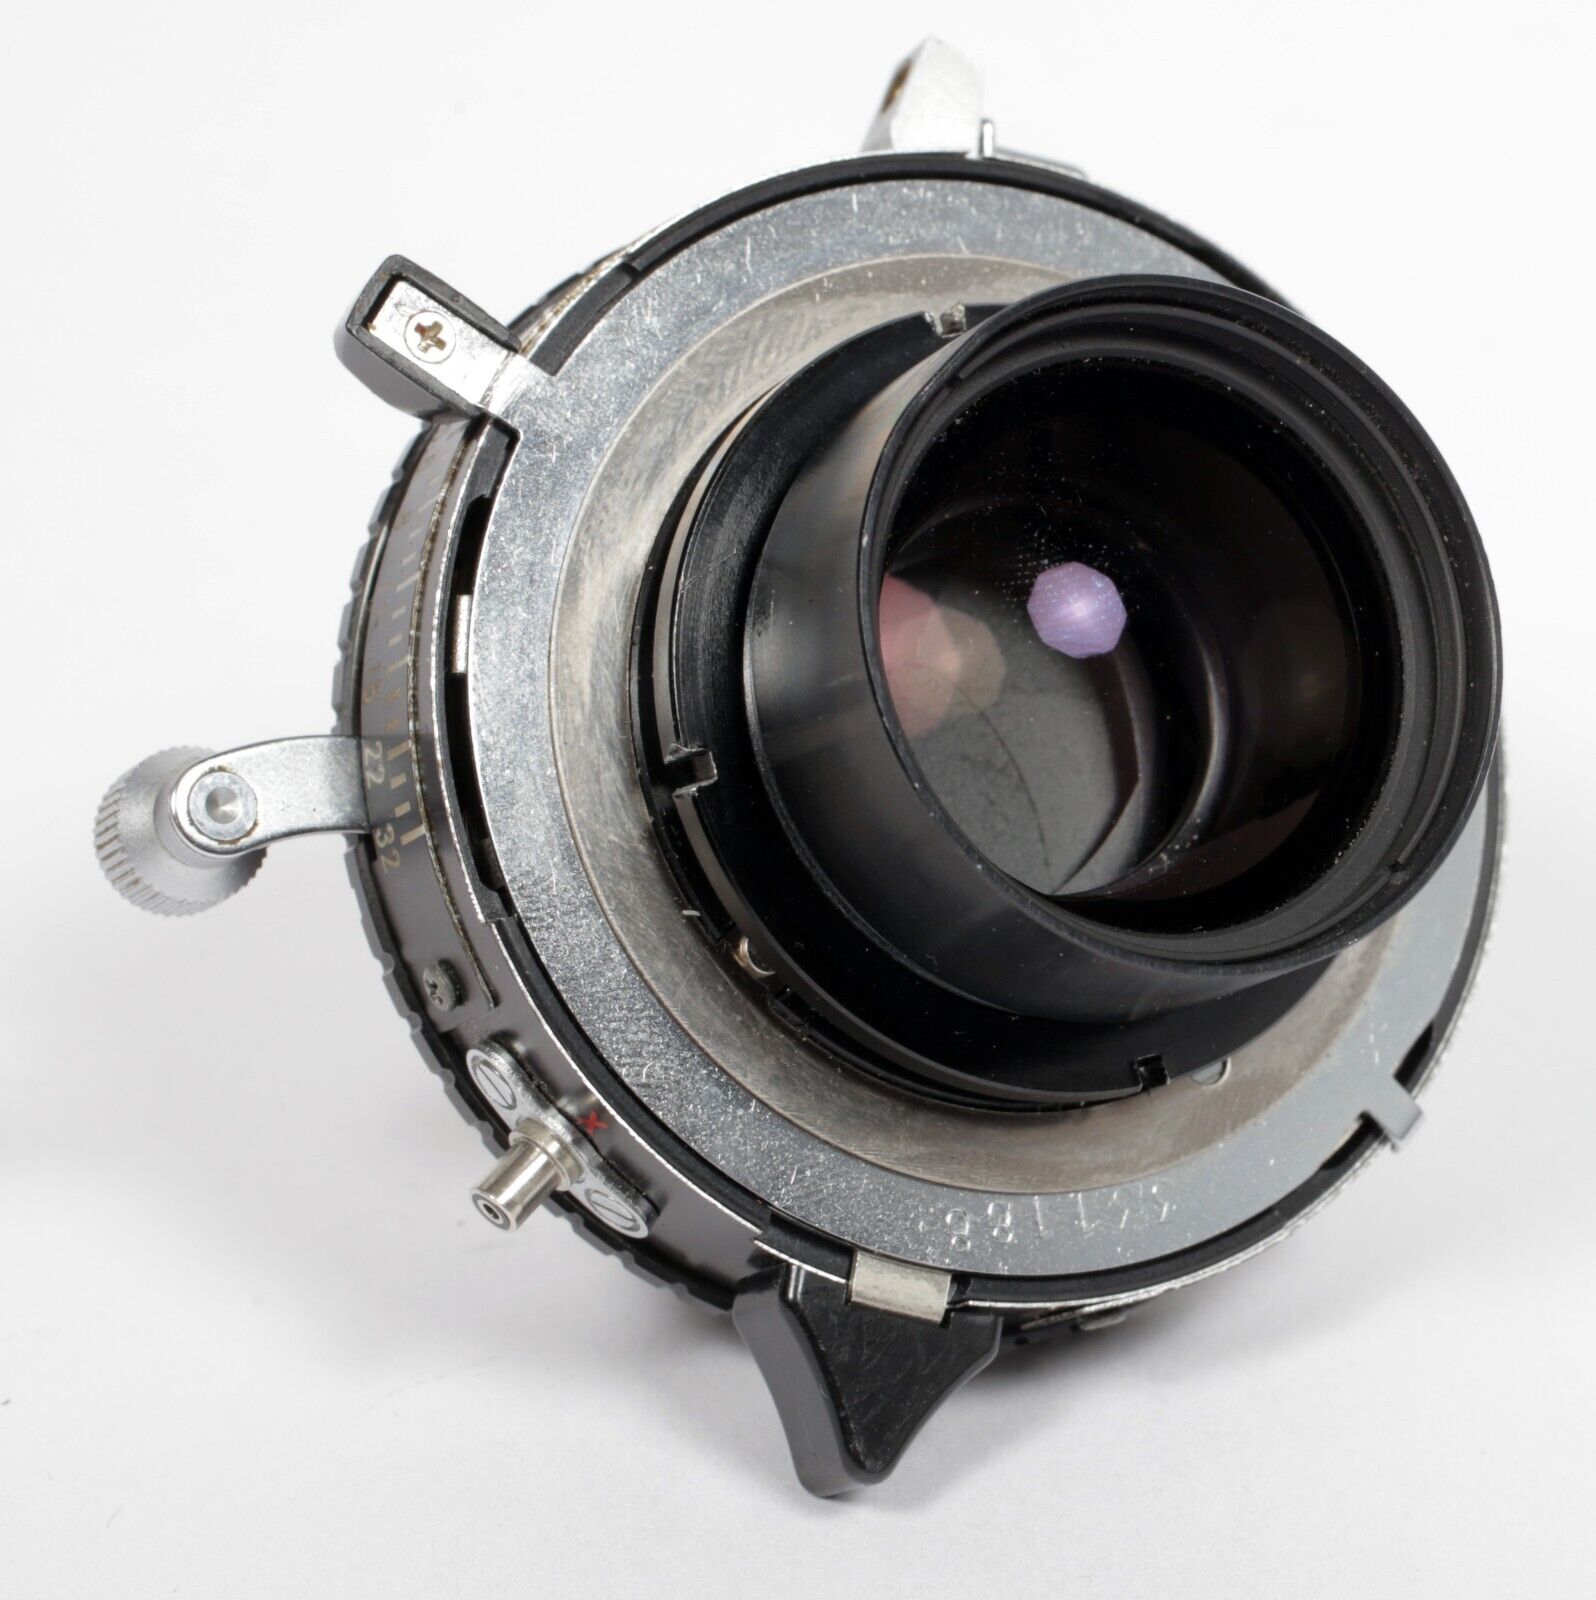 Schneider Apo Digitar 90mm F4.5 N-53° MC Macro lens in Copal #0 shutter #412